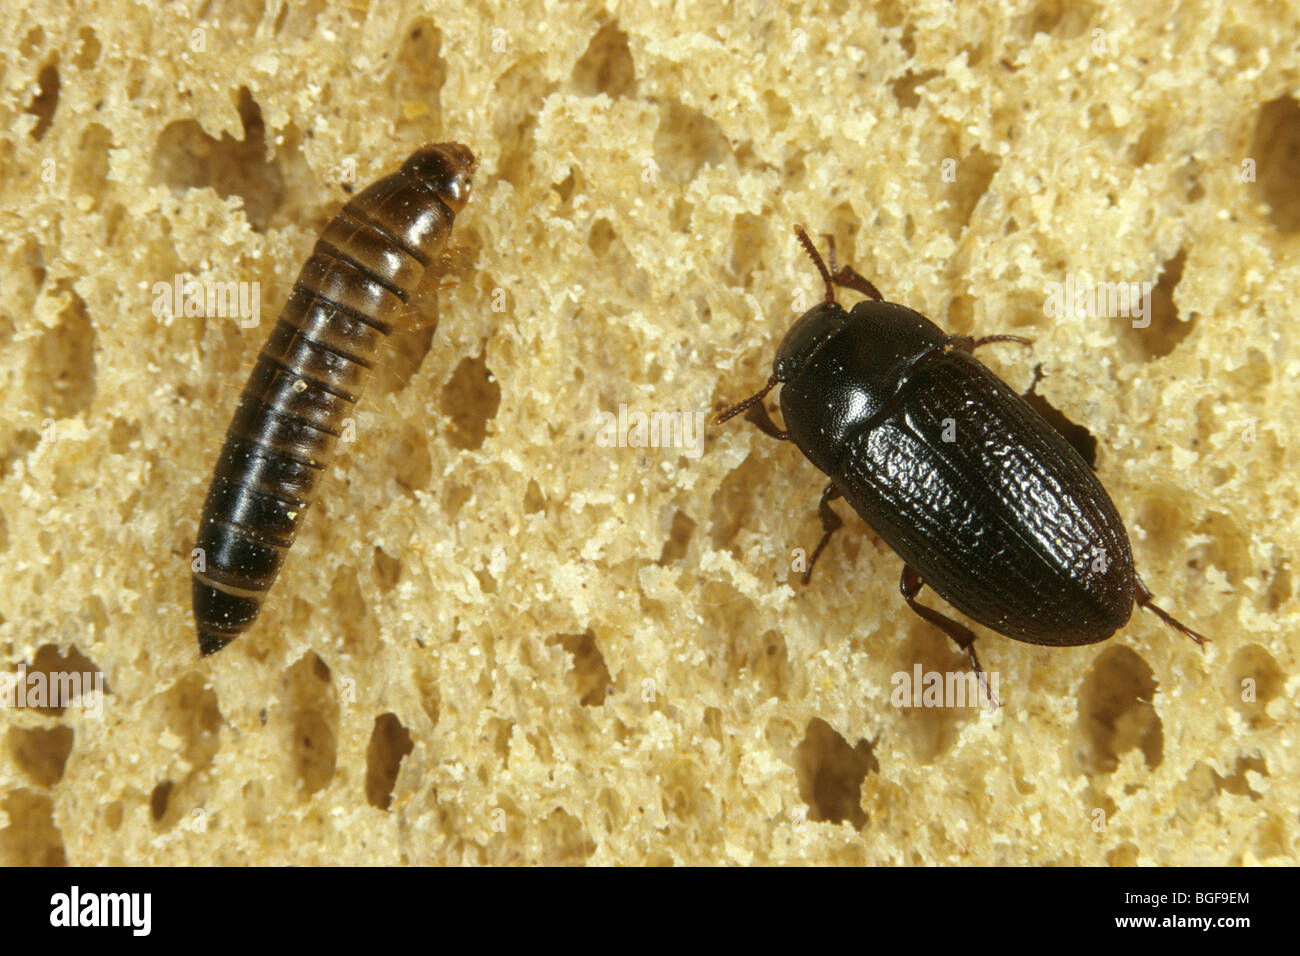 Lesser Mealworm Beetle (Alphitobius diaperinus), beetle and larva on bread. Stock Photo